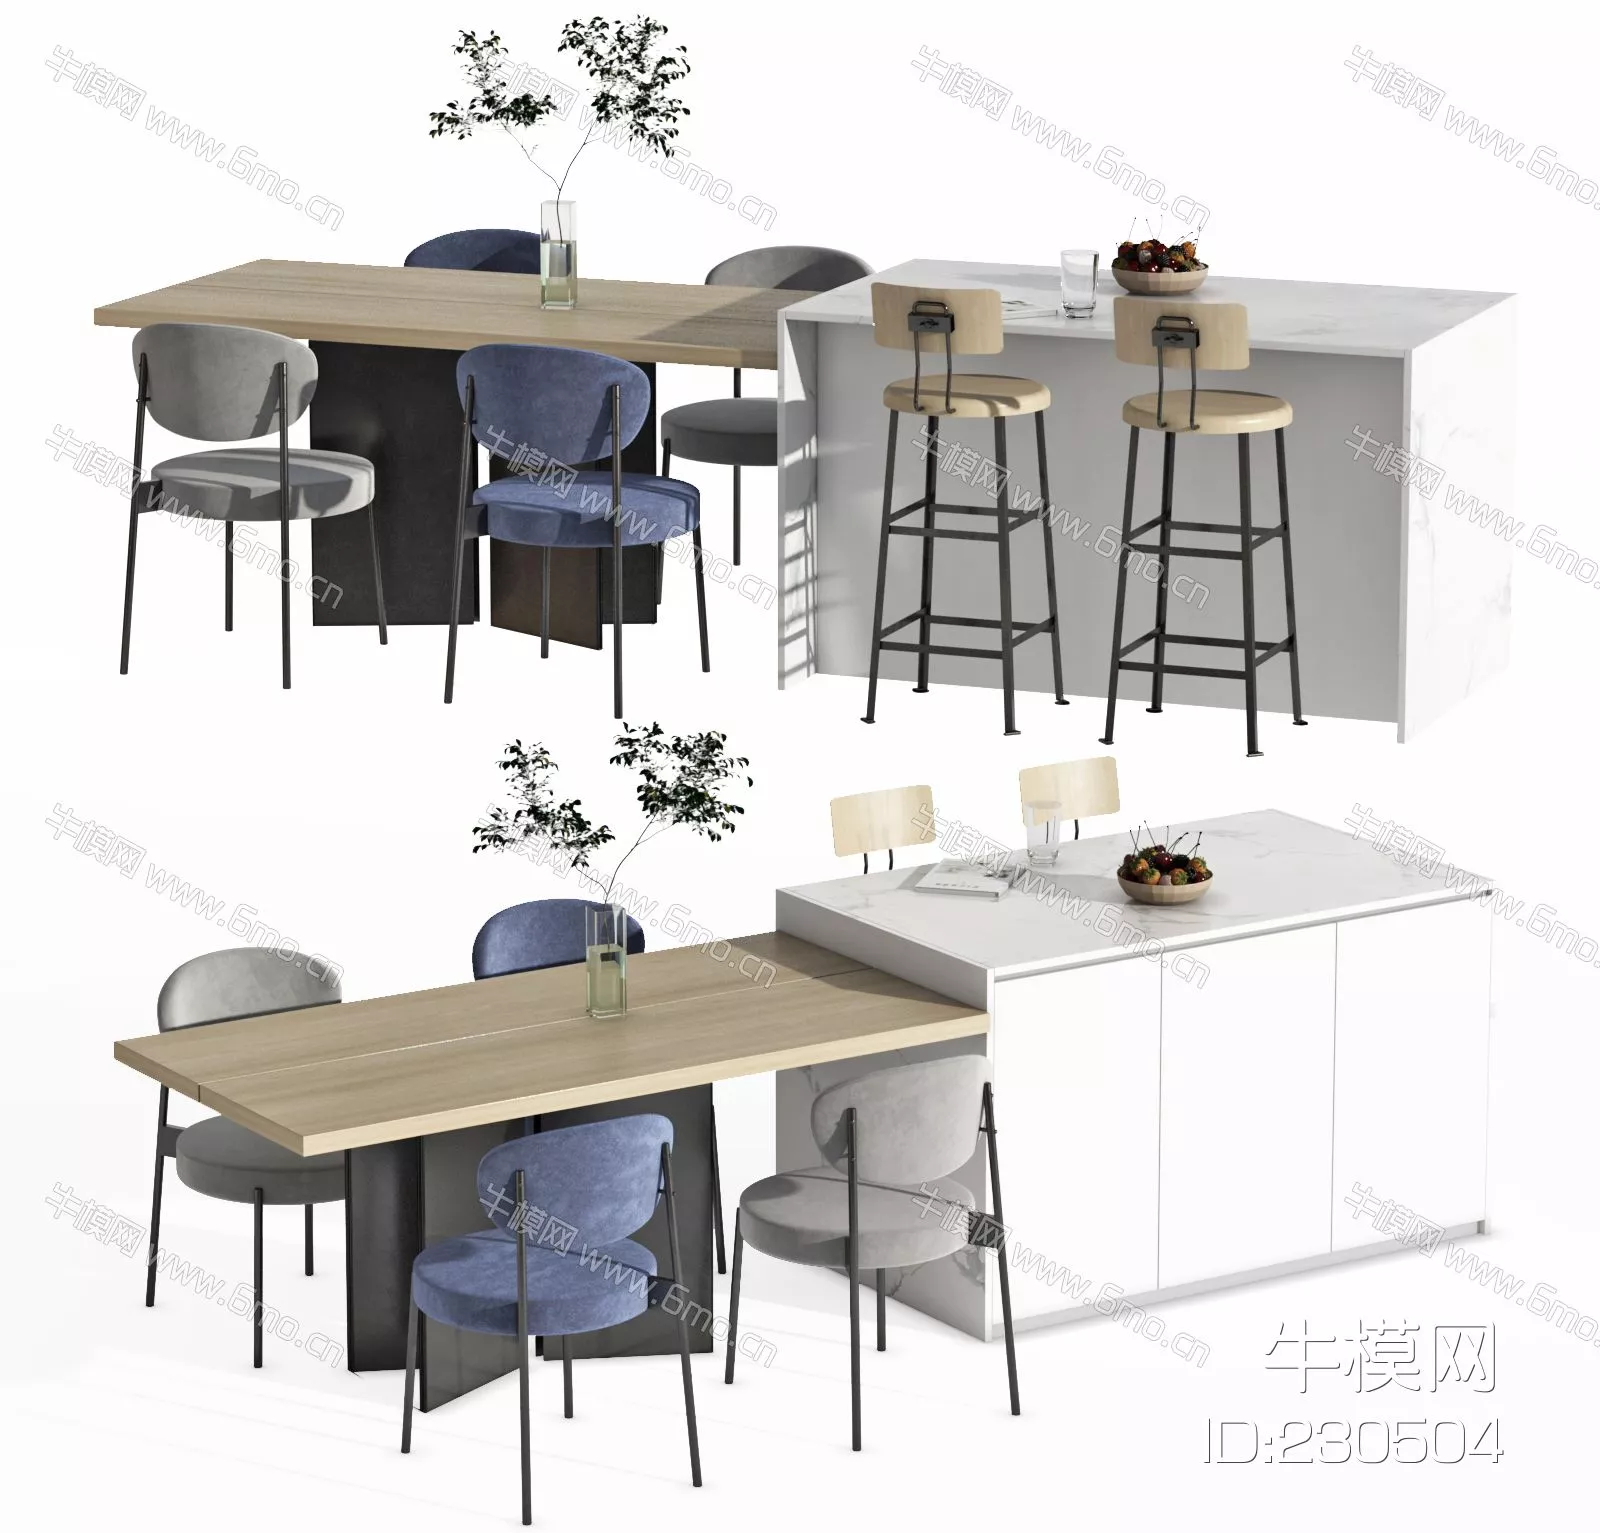 MODERN DINING TABLE SET - SKETCHUP 3D MODEL - VRAY - 230504